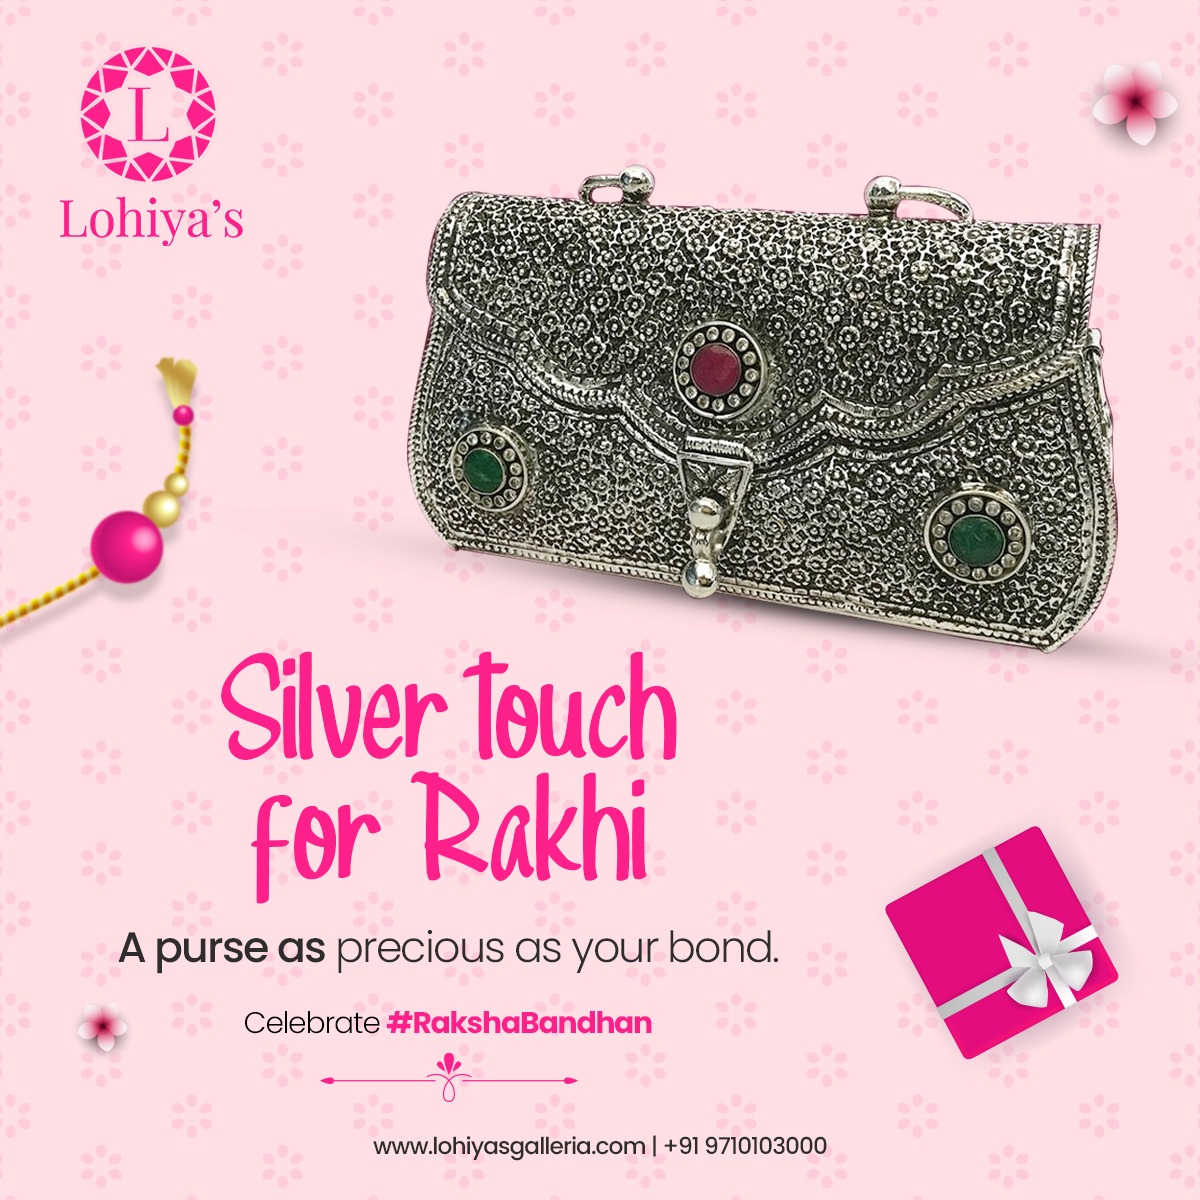 Add a touch of elegance to this Rakhi with our exquisite silver purse from Lohiyas Galleria! 🎁✨ 
.
To Order this contact - +91 97101 03000
.
#LohiyasGalleria #RakhiGifting #JaipurFashion #SilverElegance #HandbagHeaven #SisterlyLove #JaipurShopping #RakhiJoy